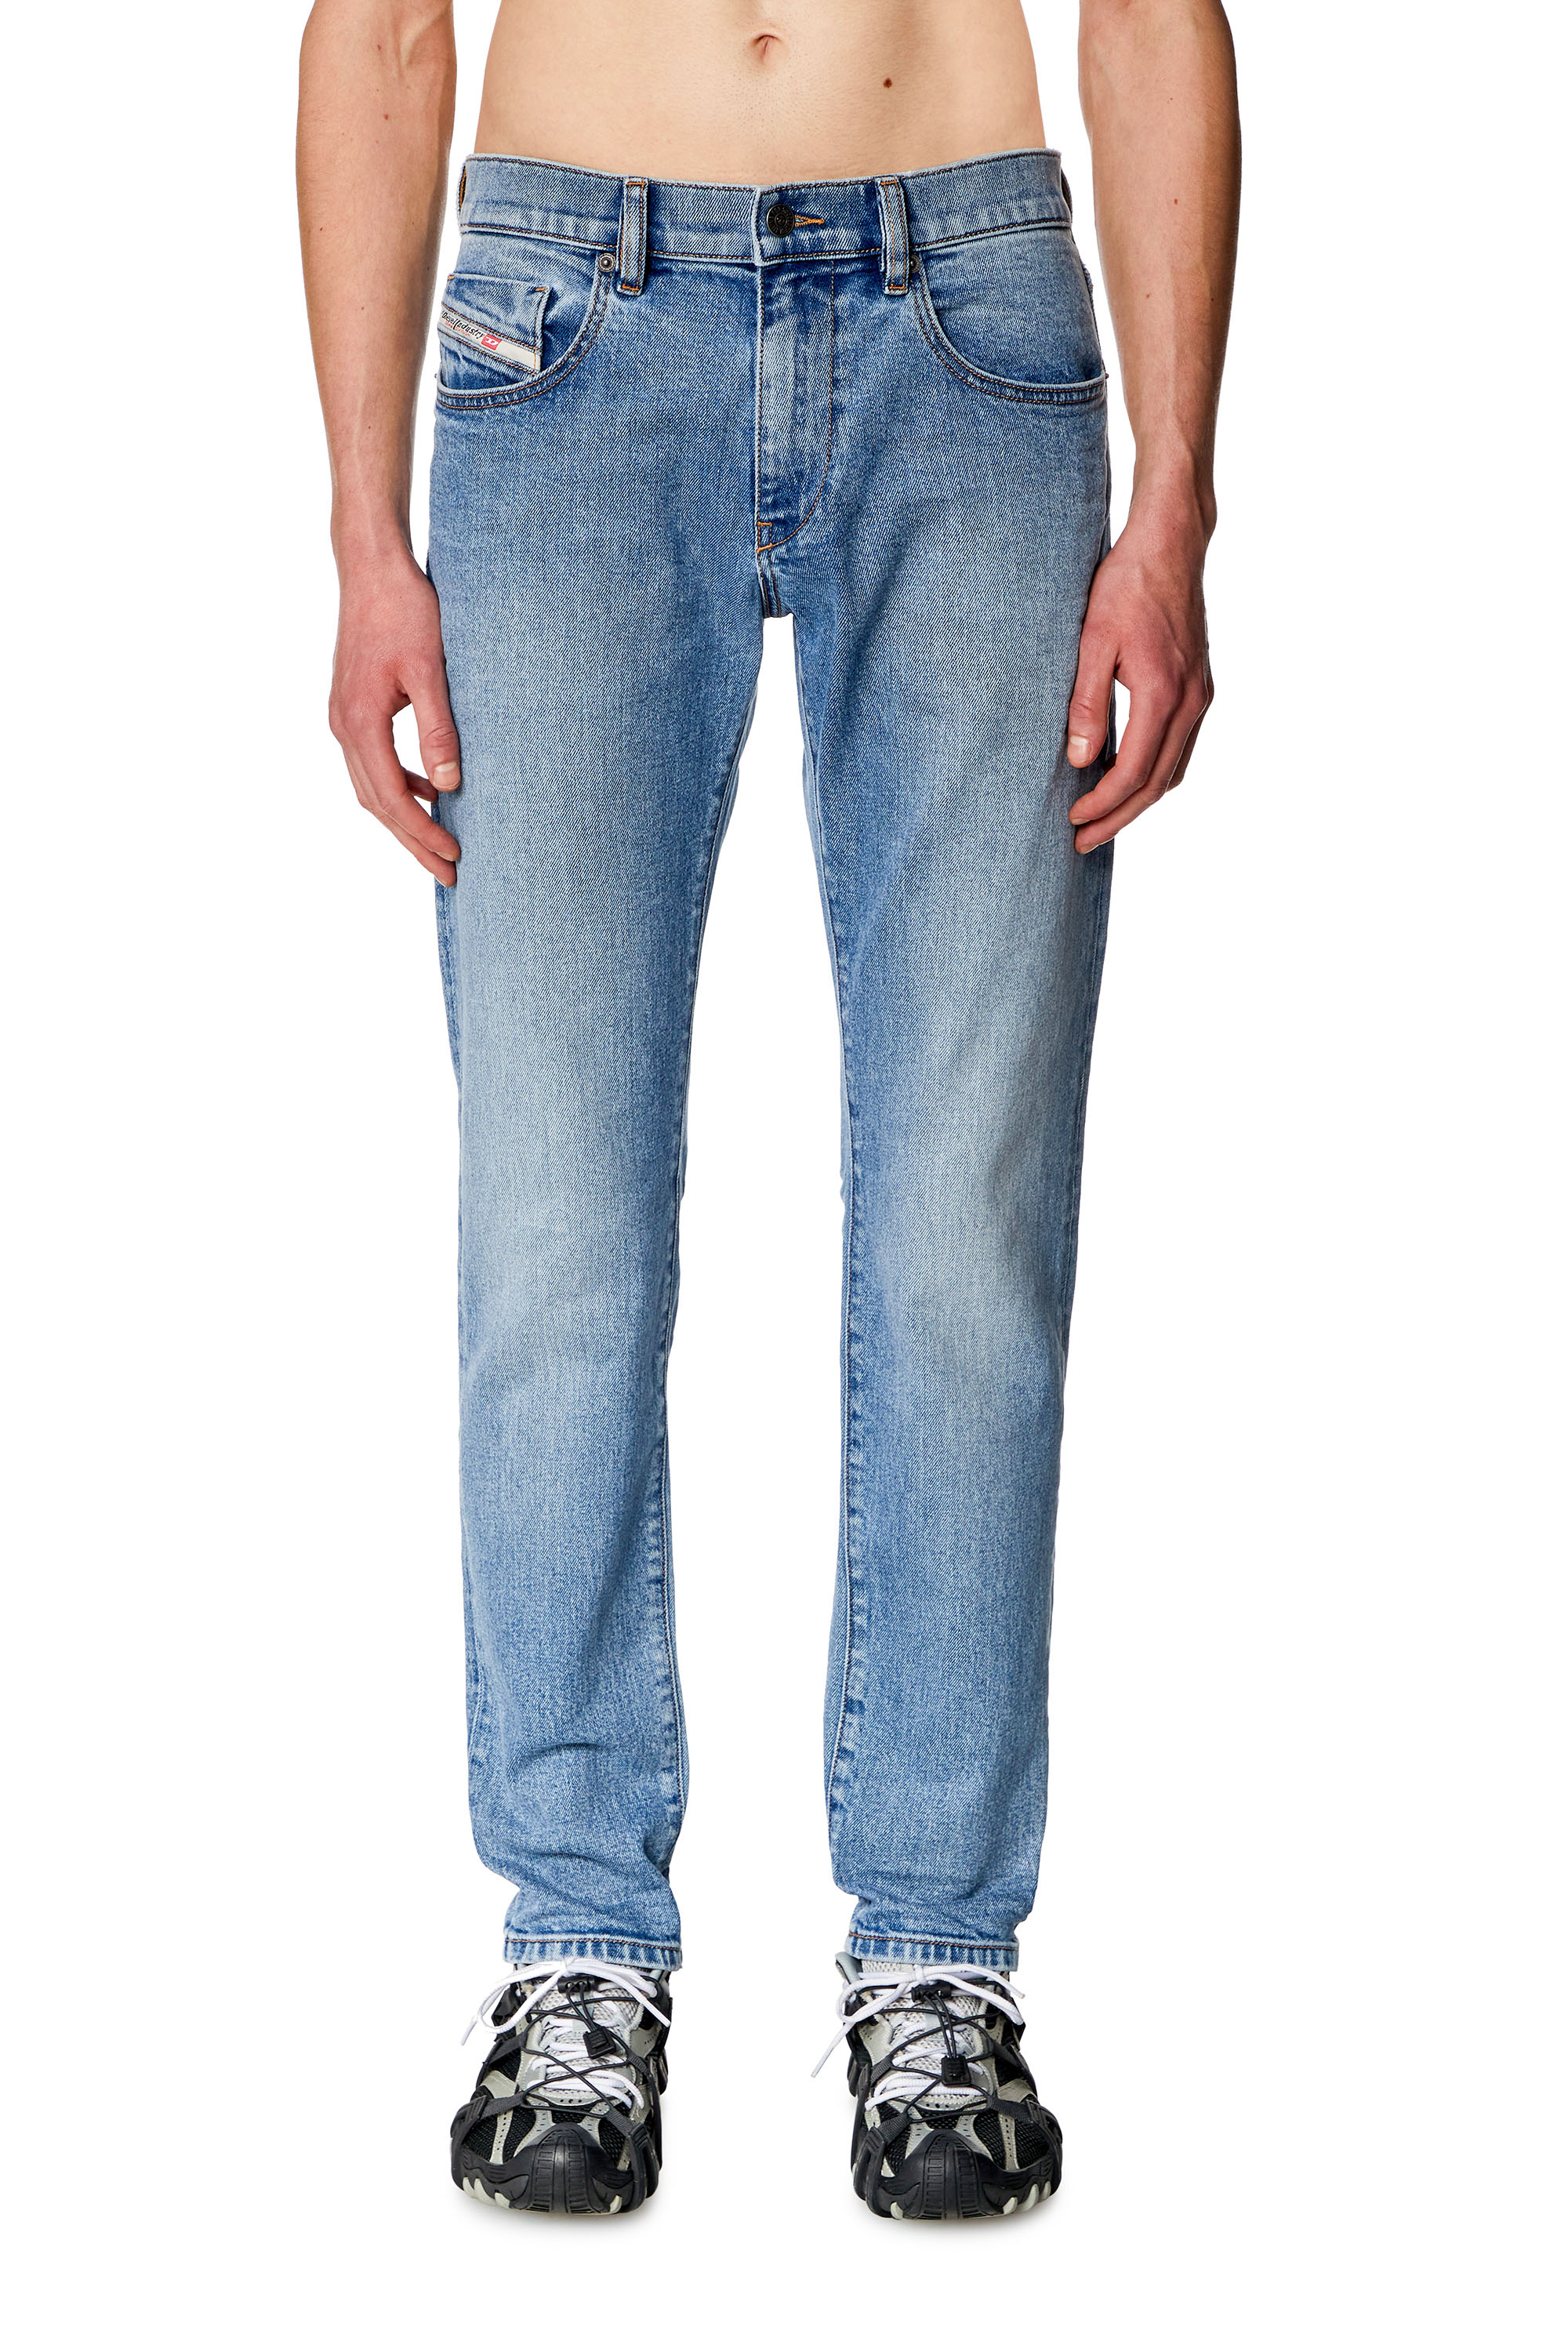 Diesel - Slim Jeans 2019 D-Strukt 0CLAF, Hombre Slim Jeans - 2019 D-Strukt in Azul marino - Image 1